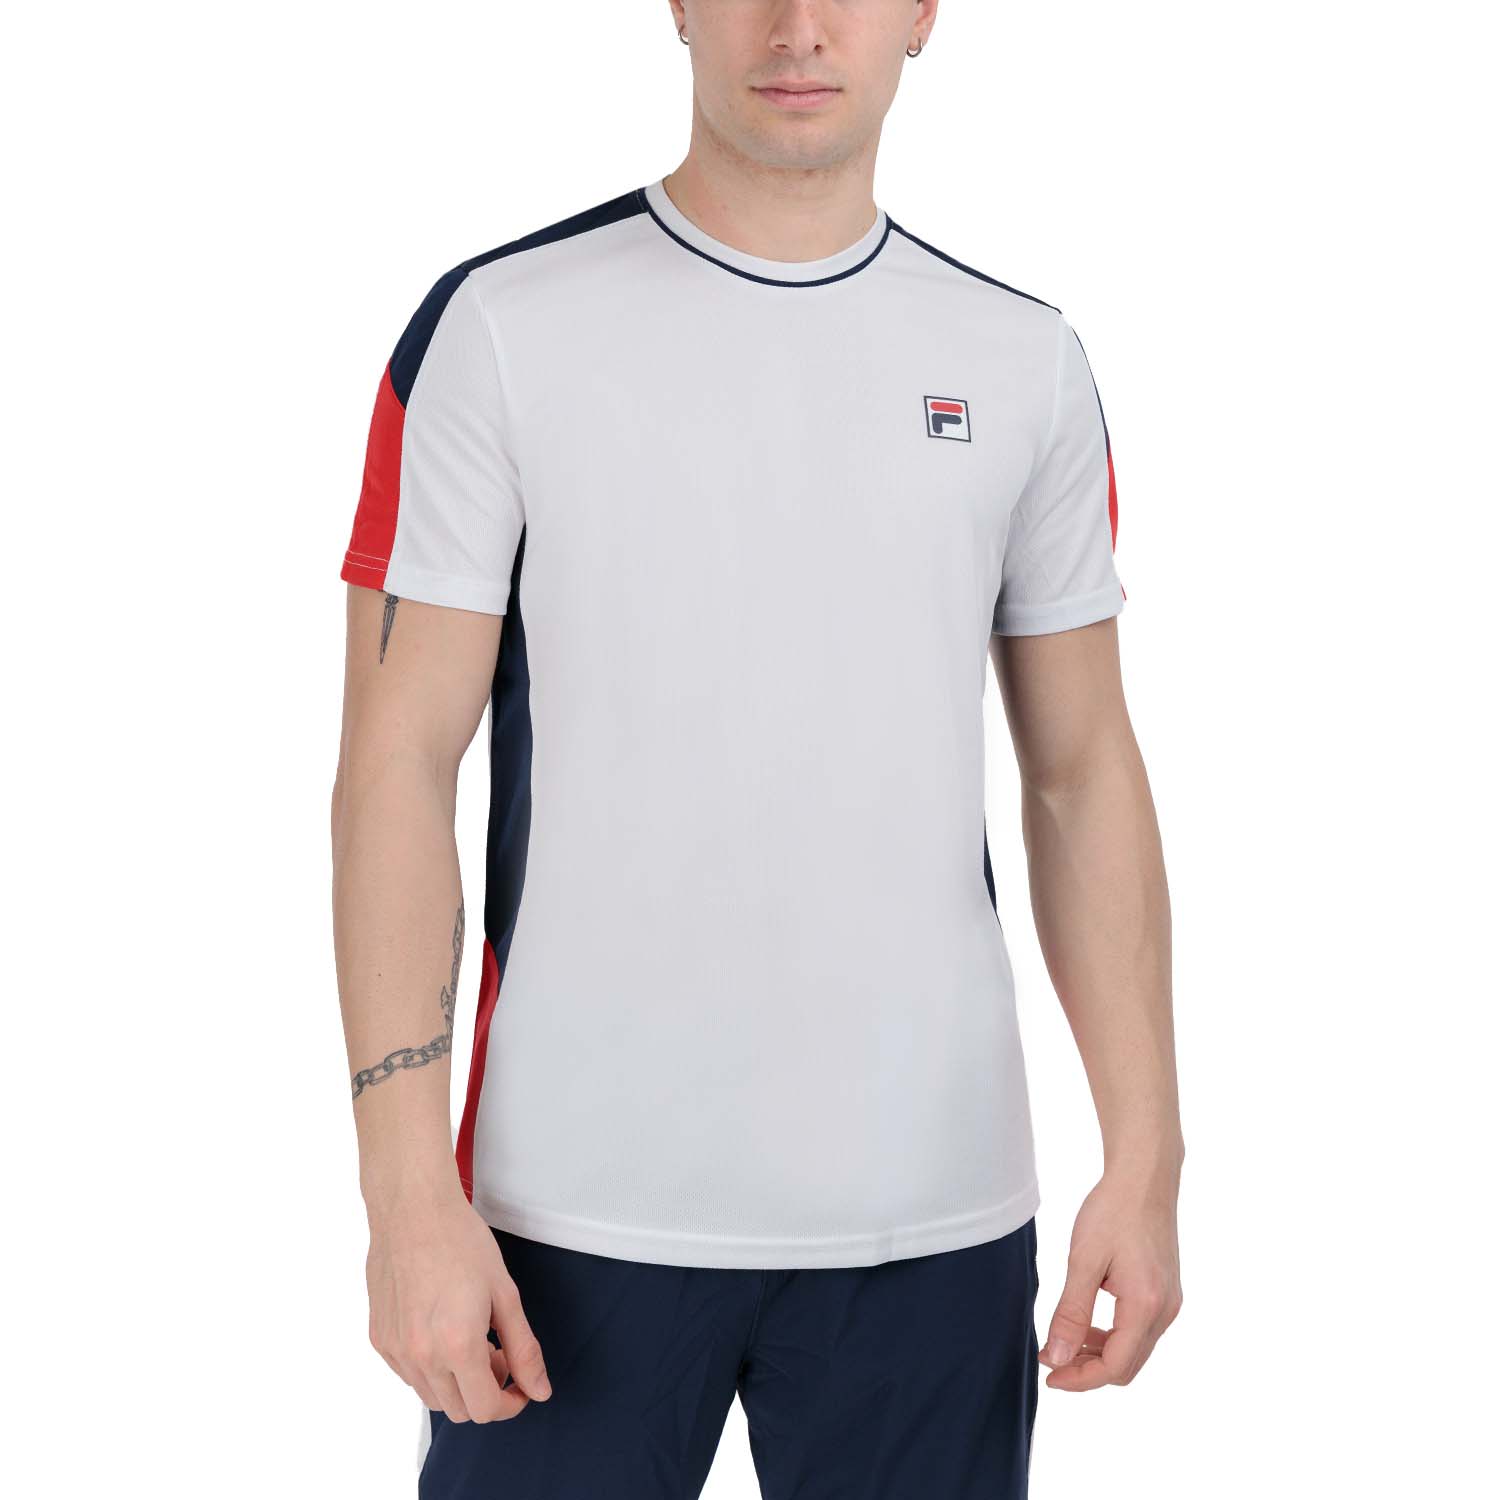 Fila Gabriel Camiseta - White/Navy